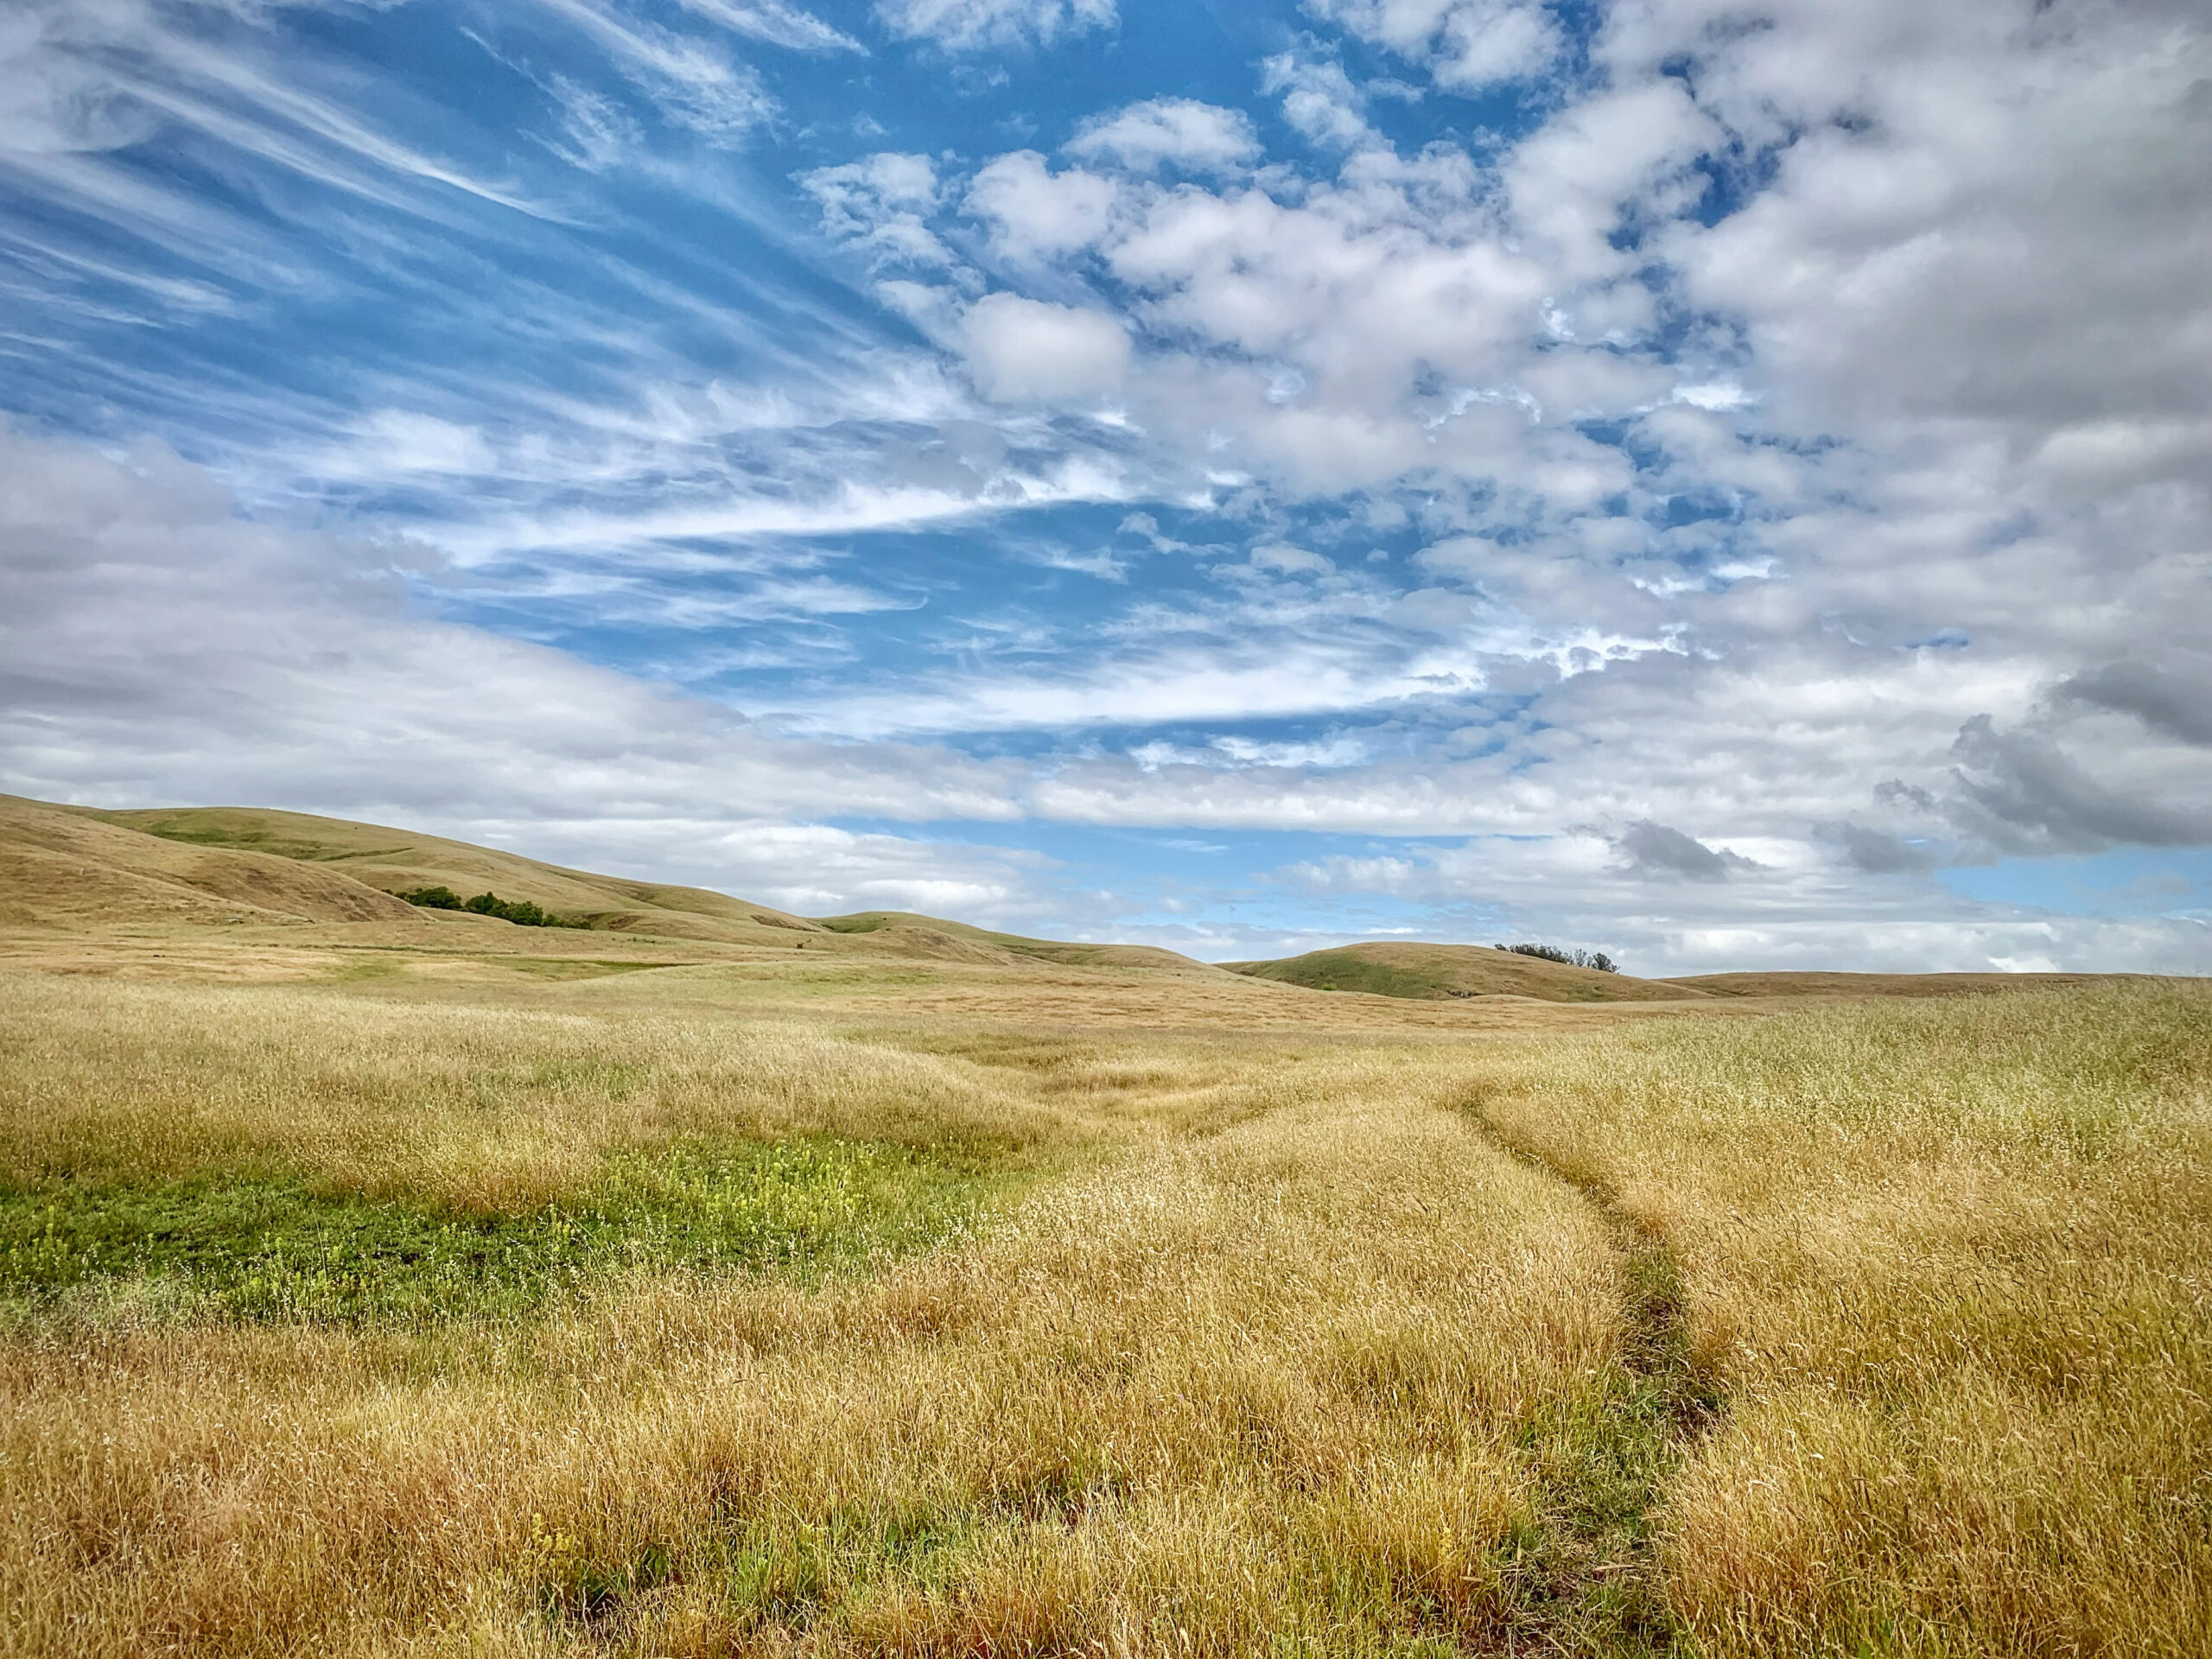 A path through a grassy field under a cloudy sky.